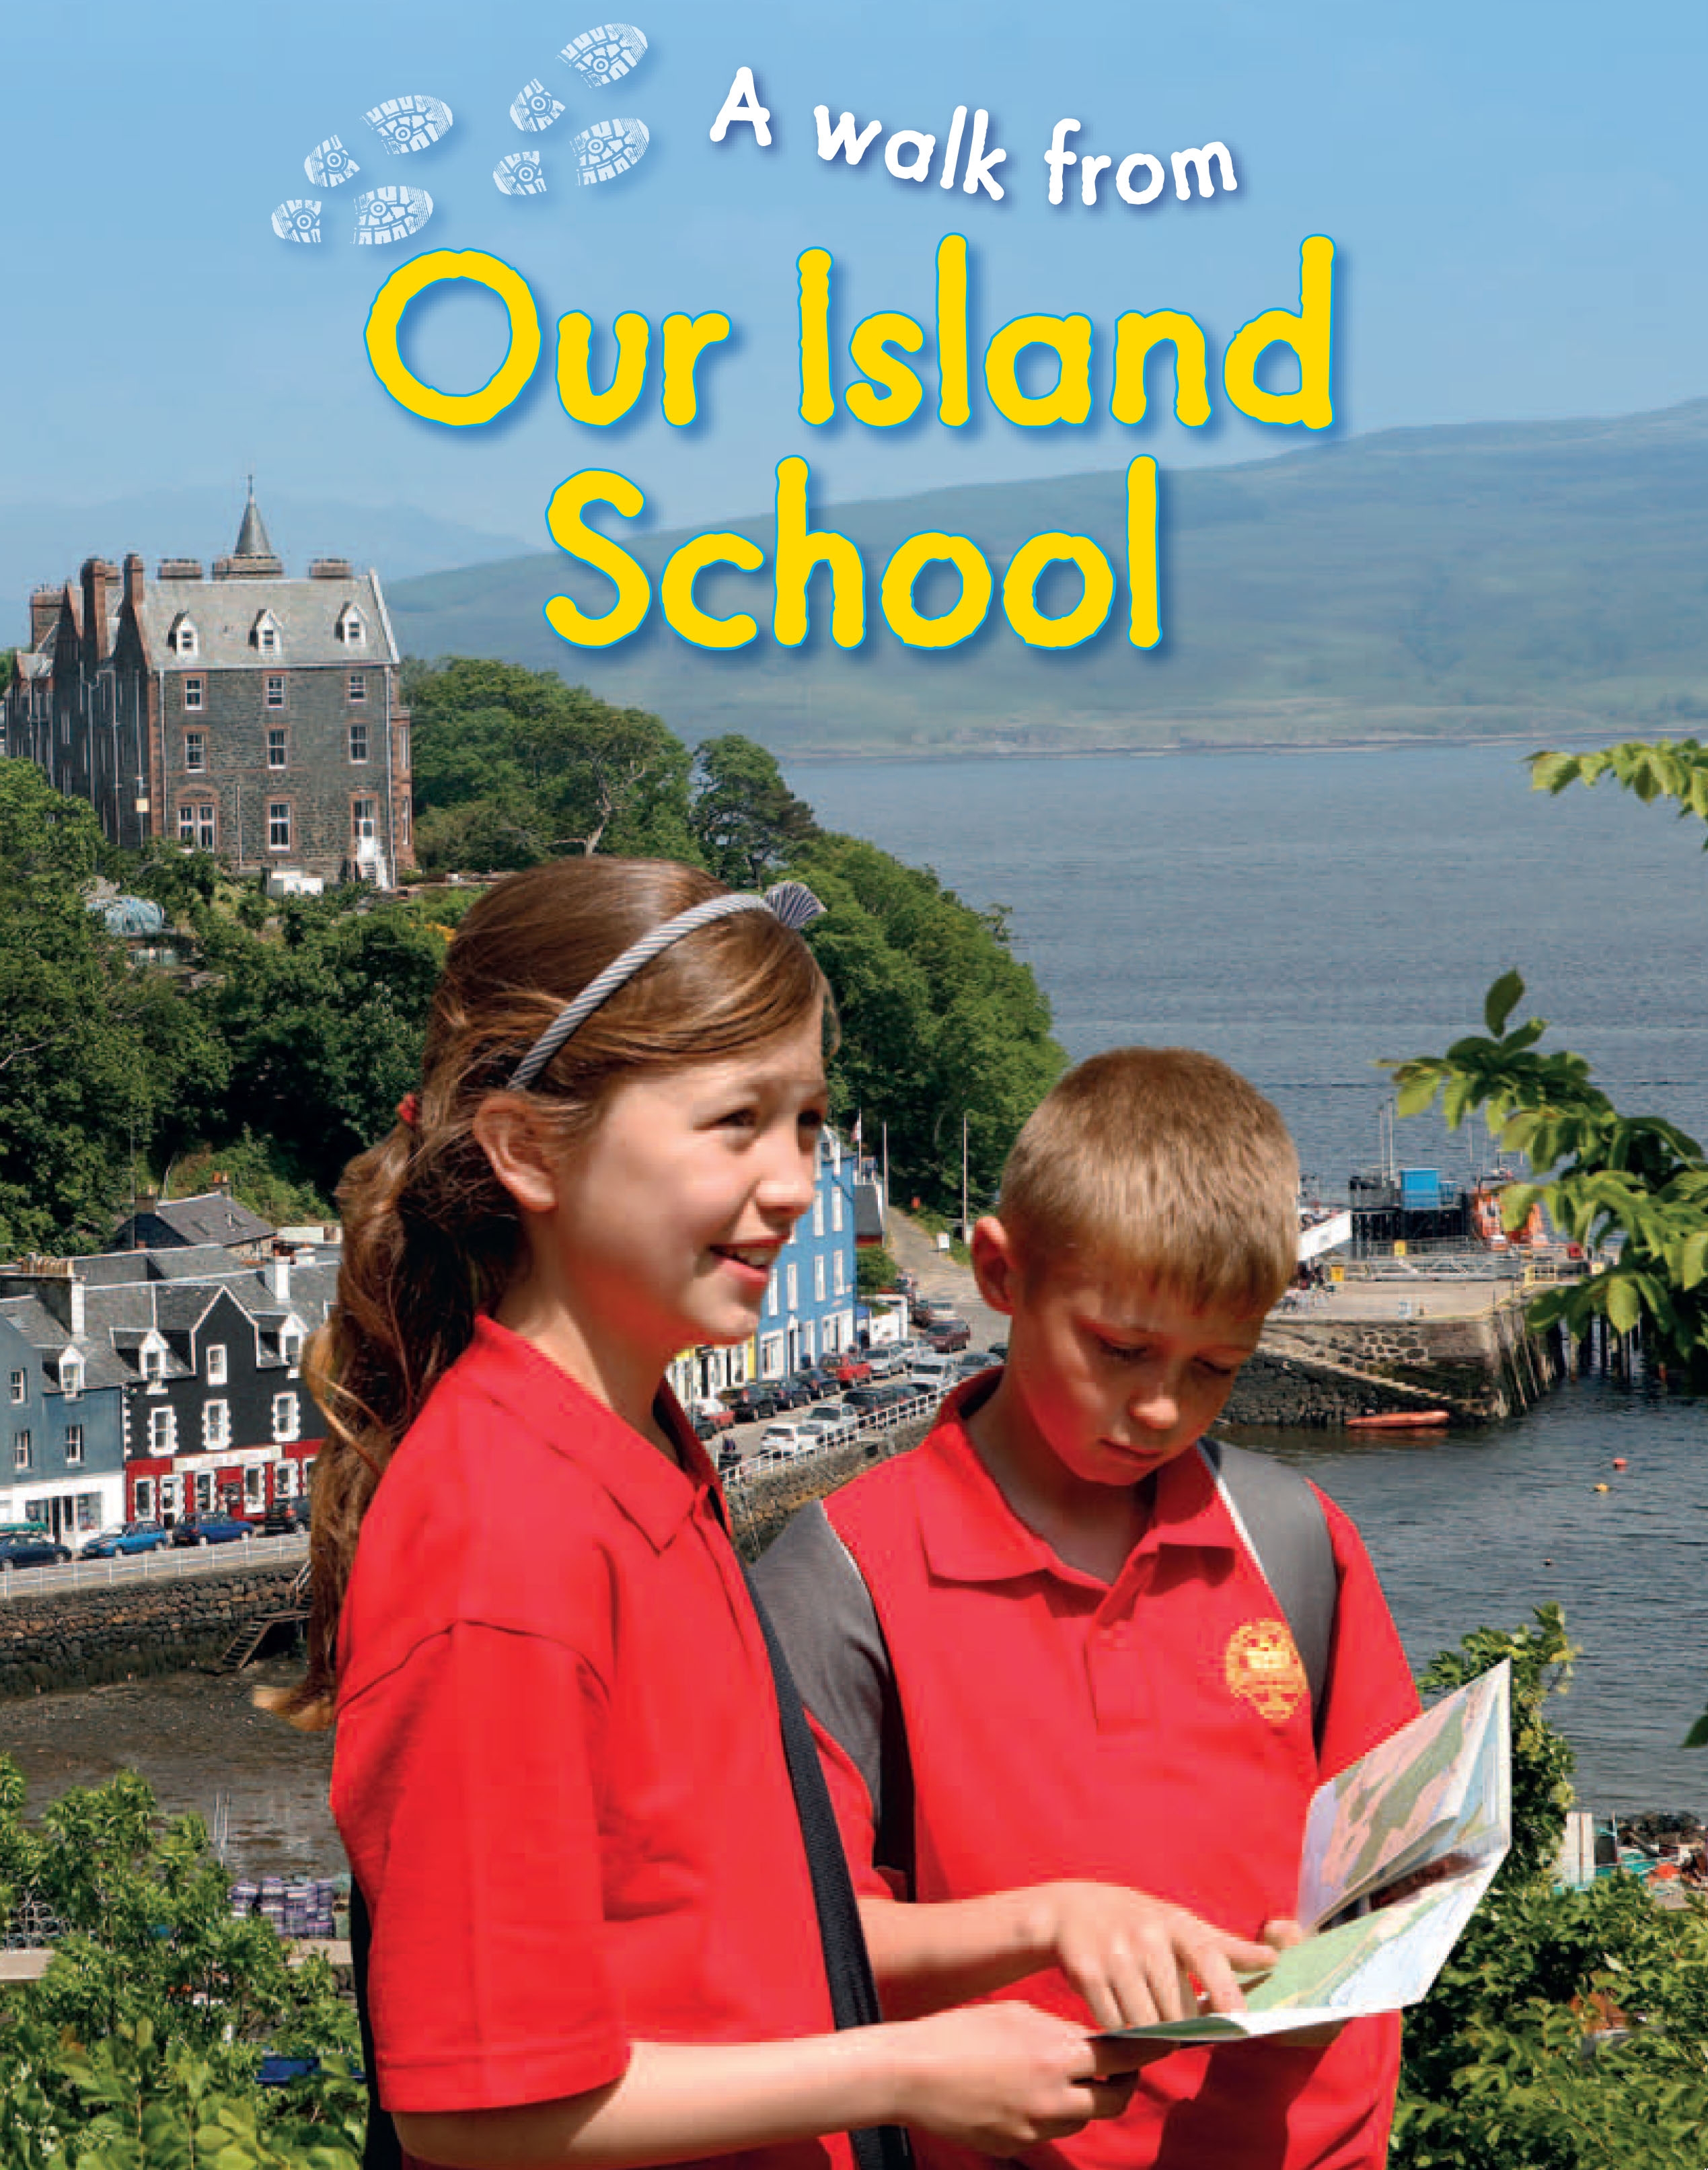 Island school. Скул Исланд. School Island.